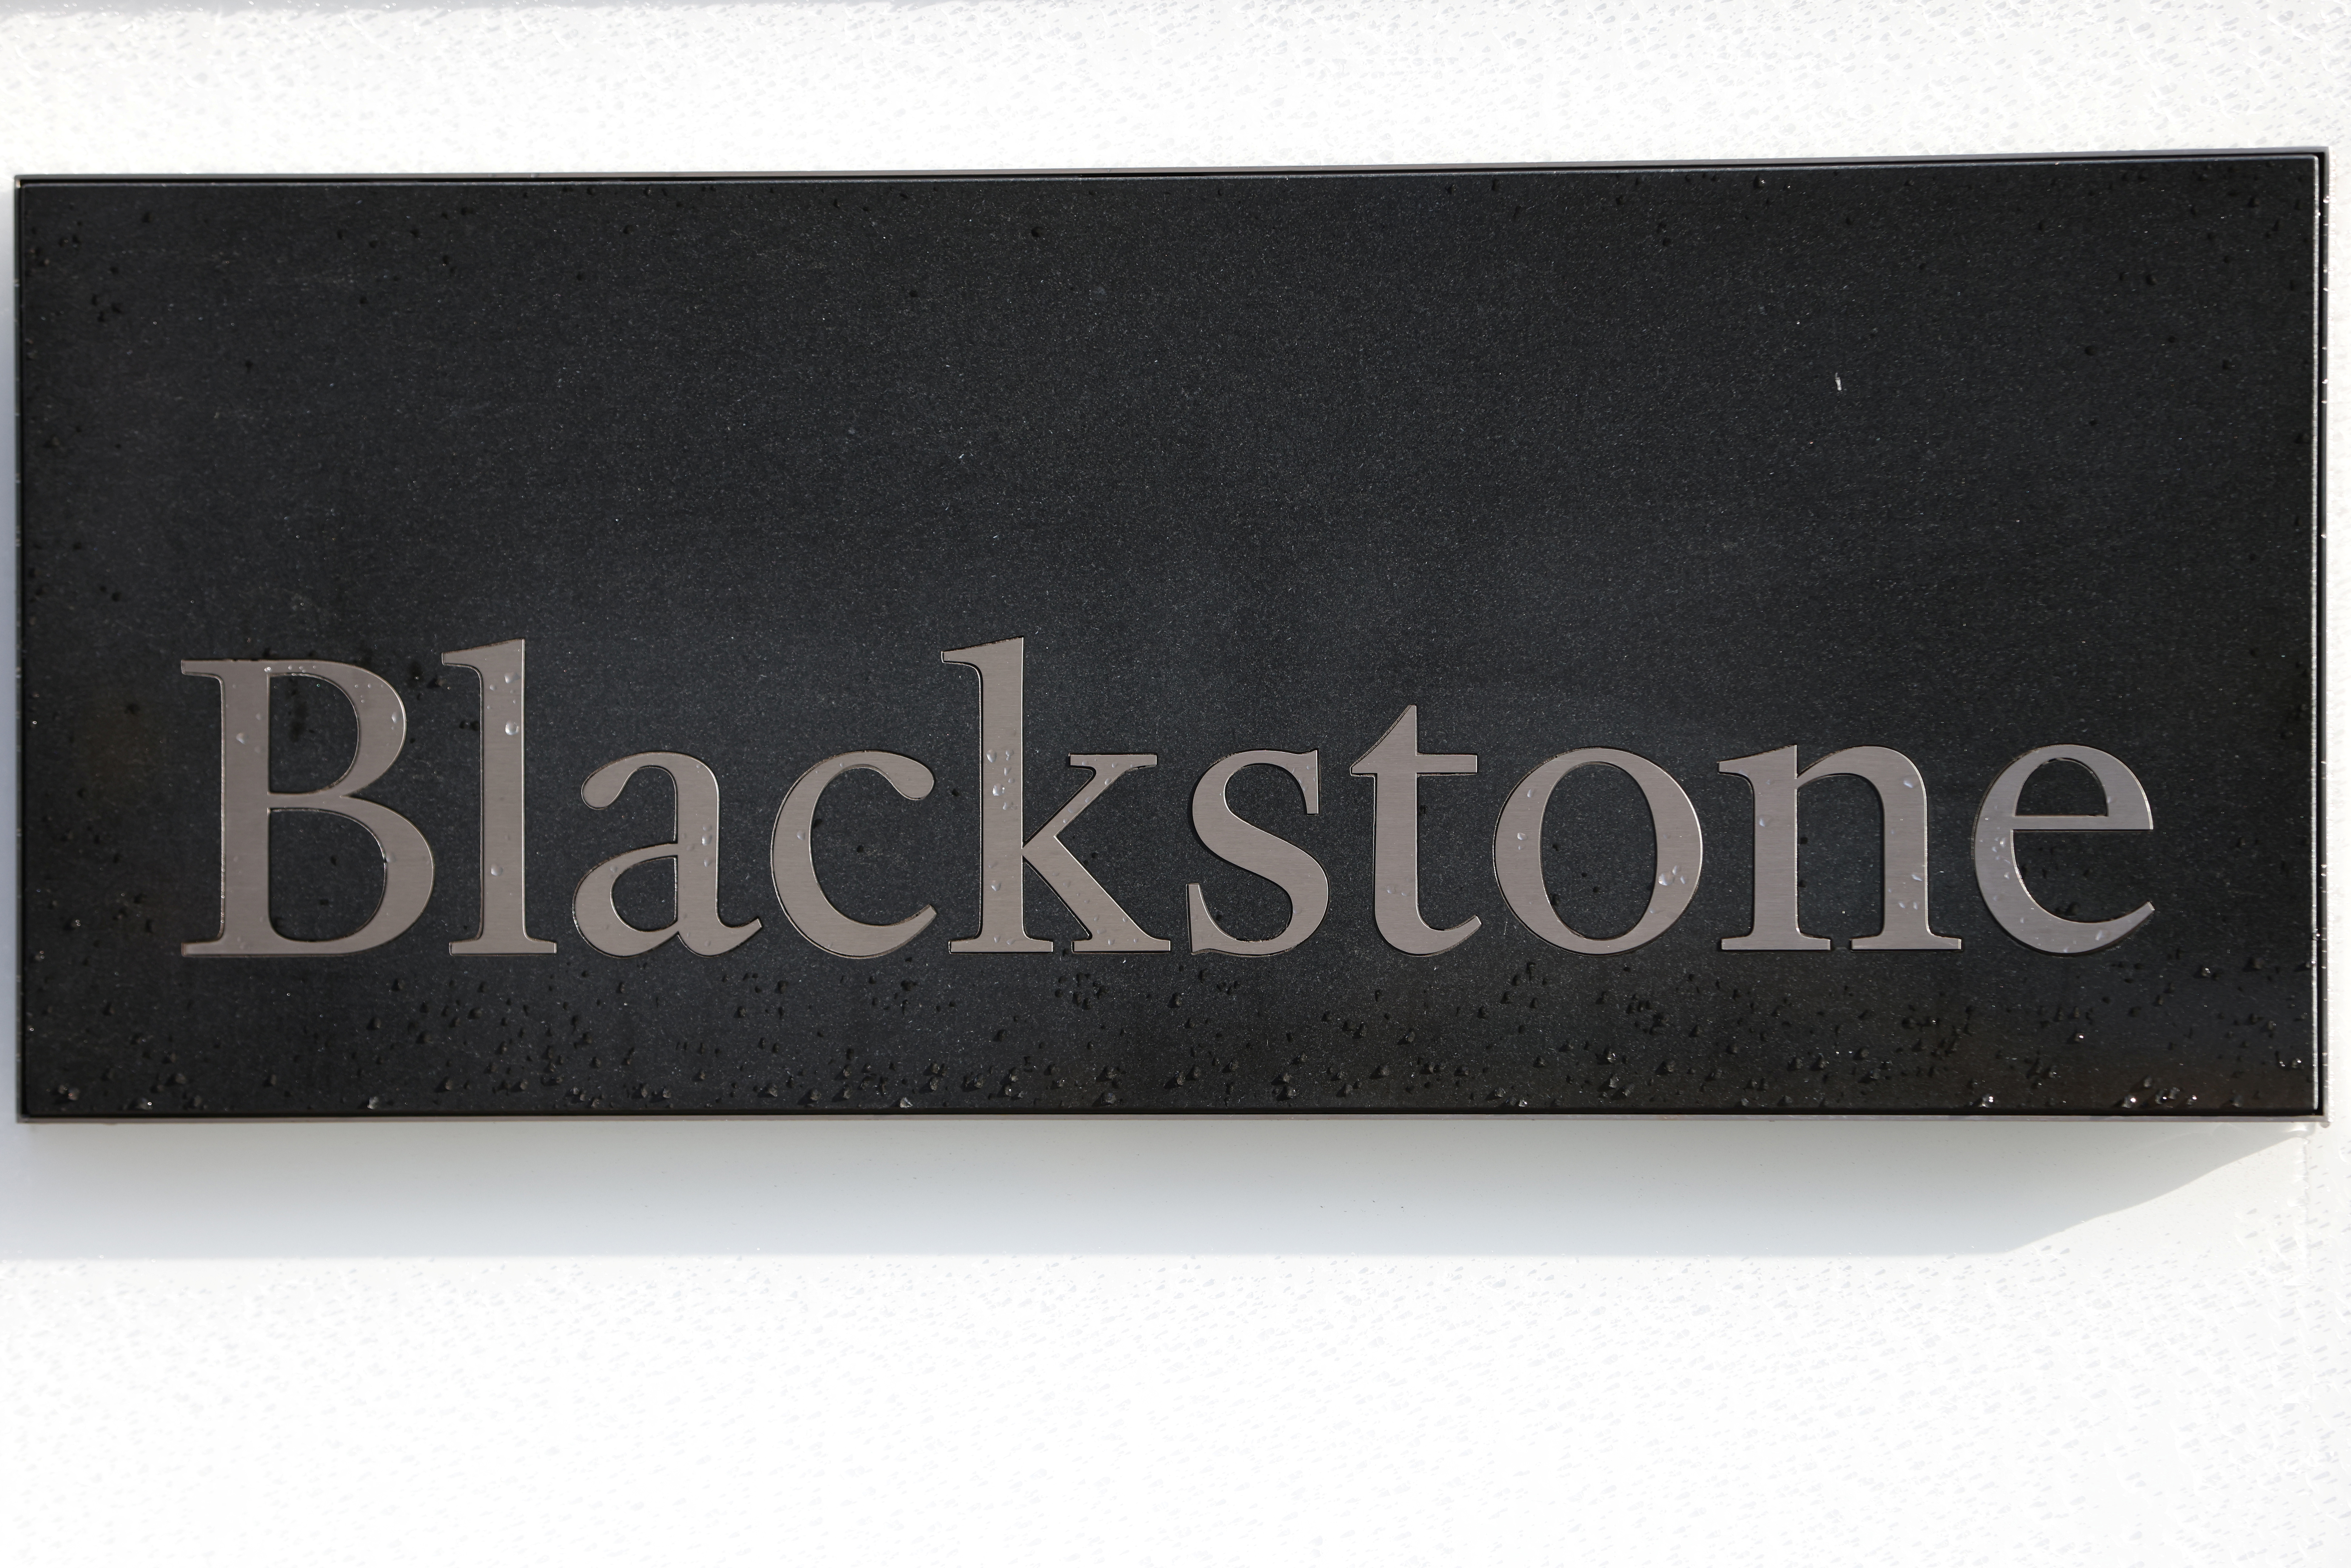  The Blackstone Group headquarters in Manhattan, New York